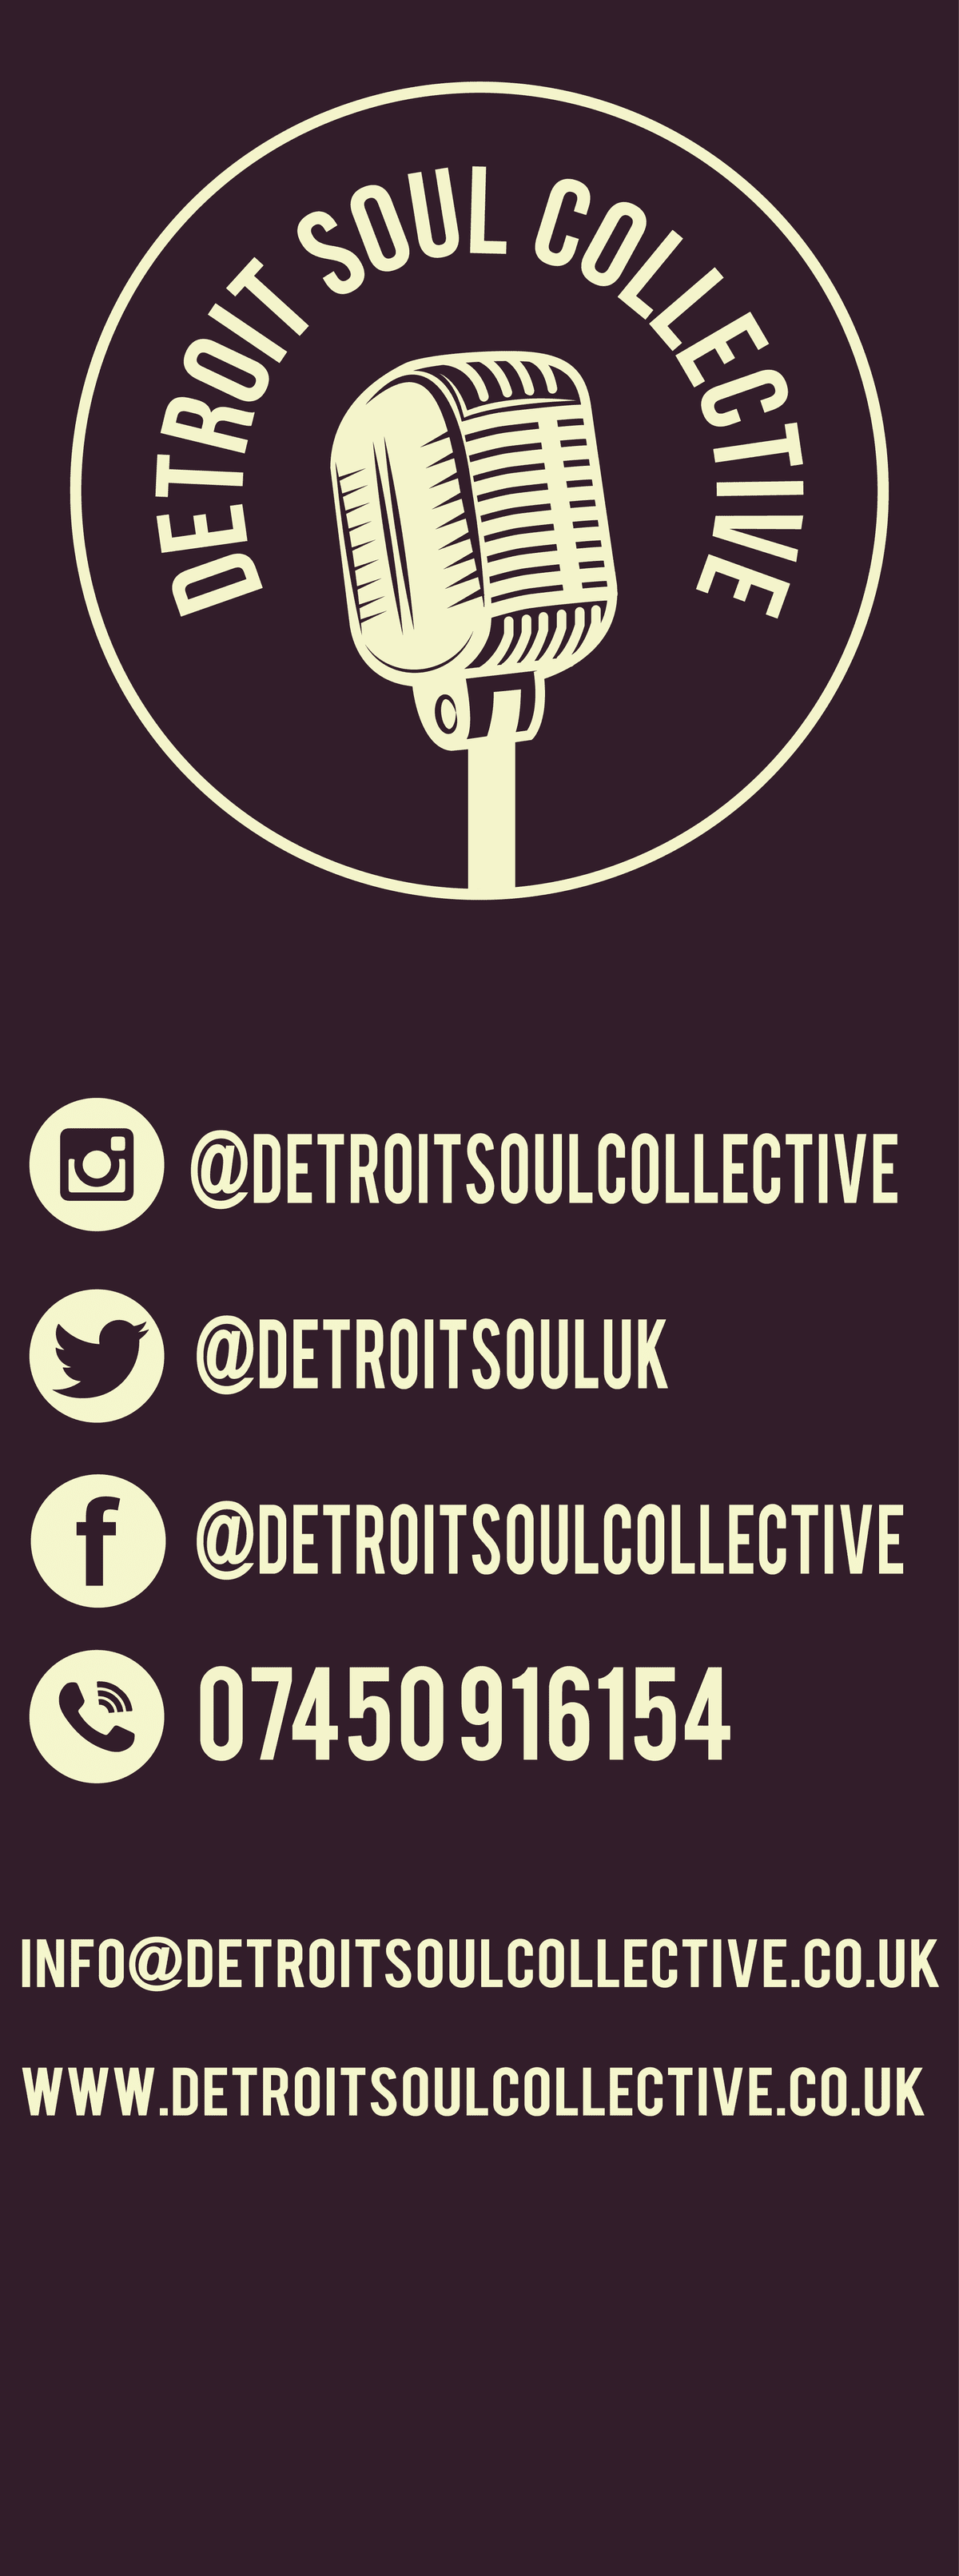 Dertriot soul collective